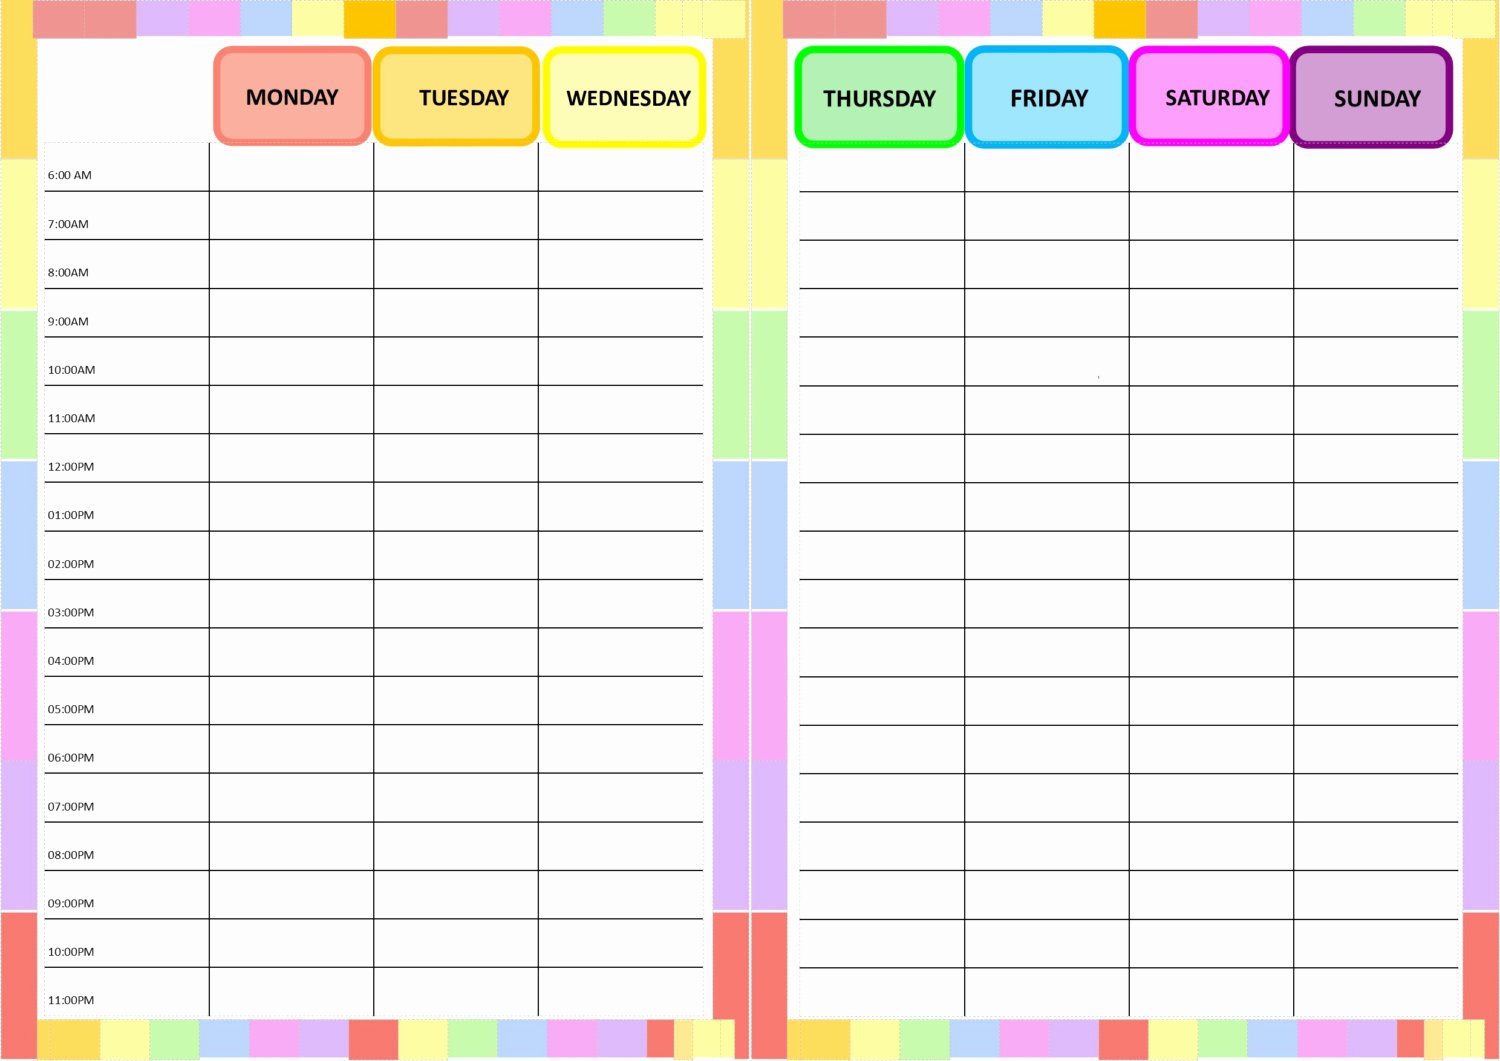 Weekly Schedule Planner Template Fresh Rainbow Template Personal Planner Weekly Schedule at A Glance